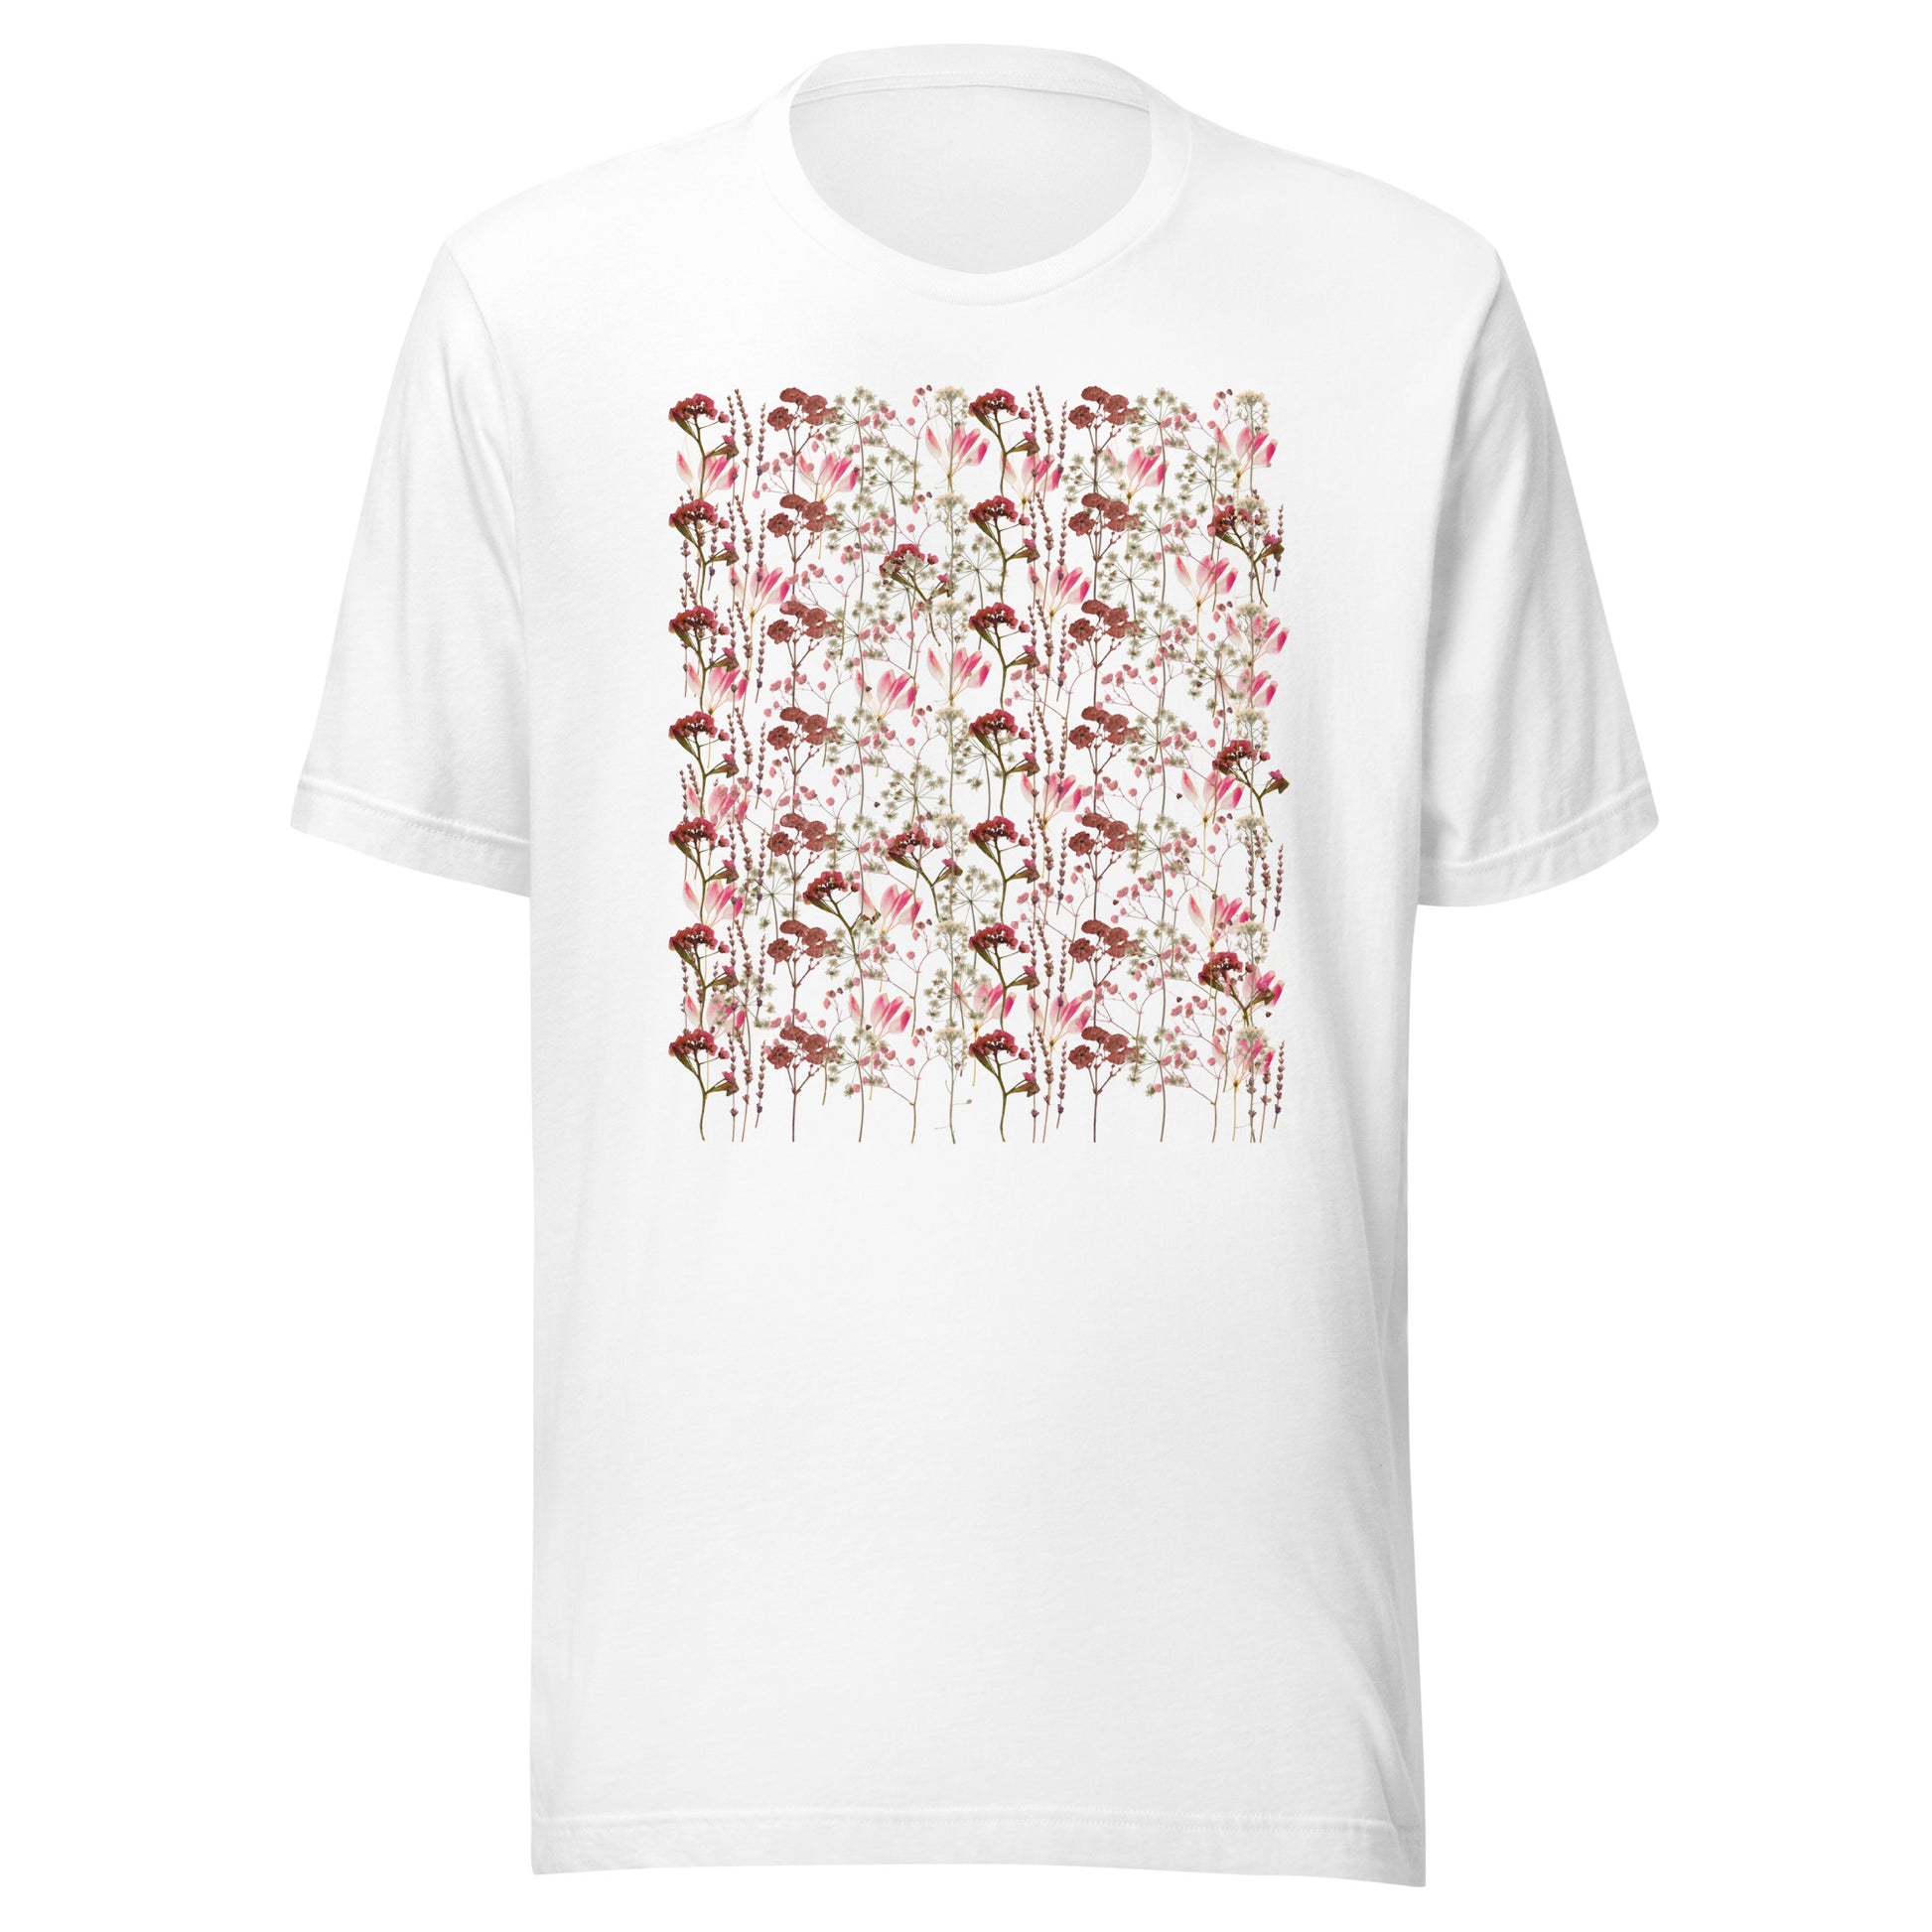 Camiseta blanca con diseño de flores prensadas